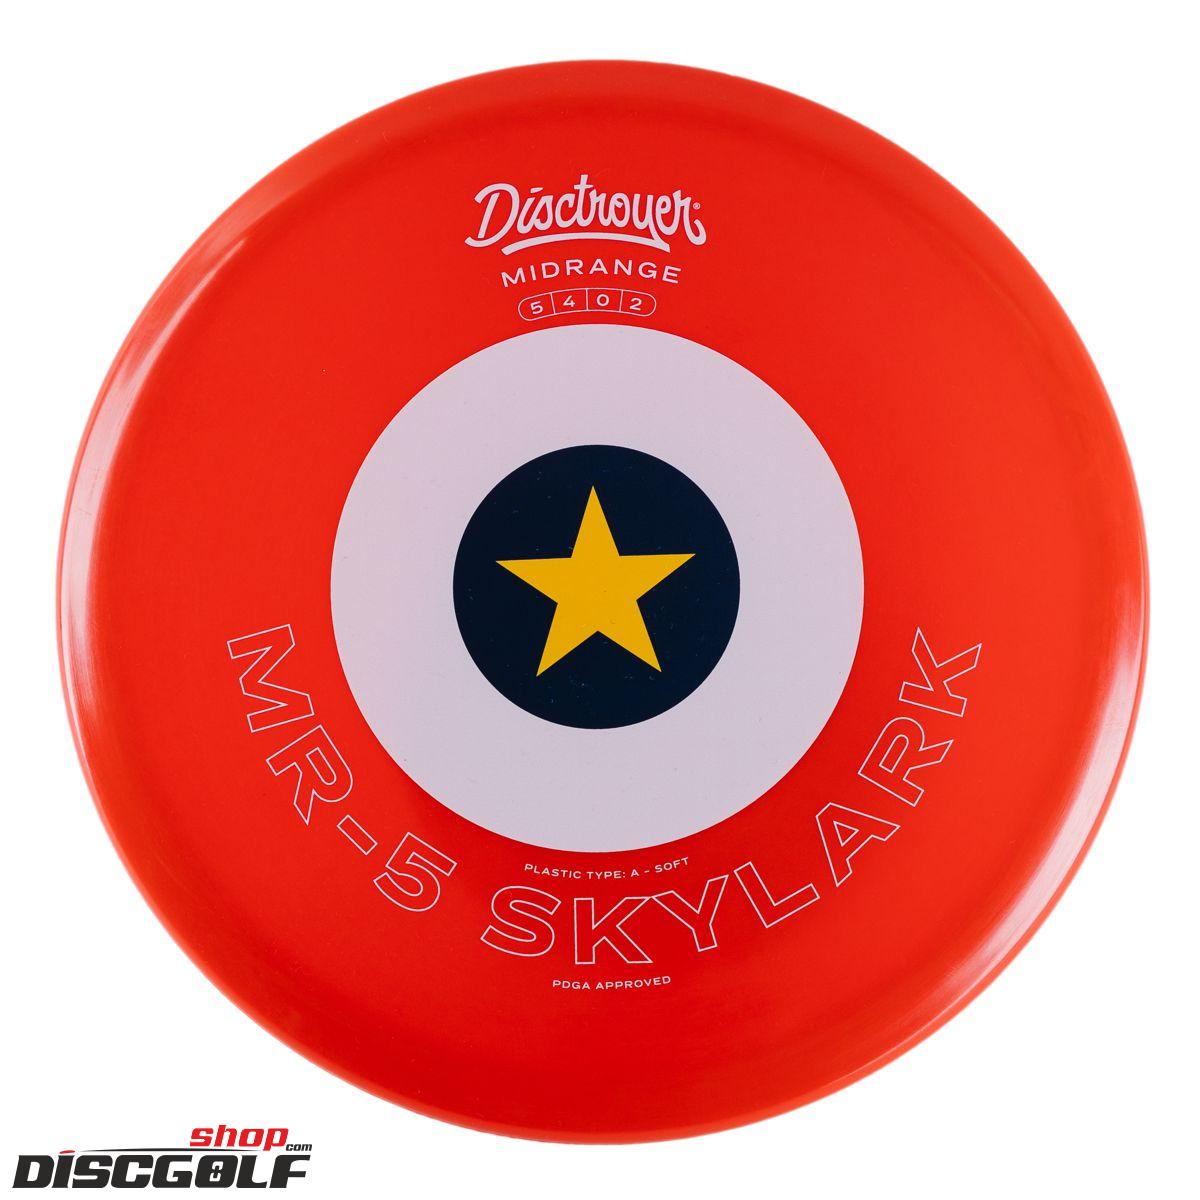 Disctroyer Skylark A-Soft Standart (discgolf)